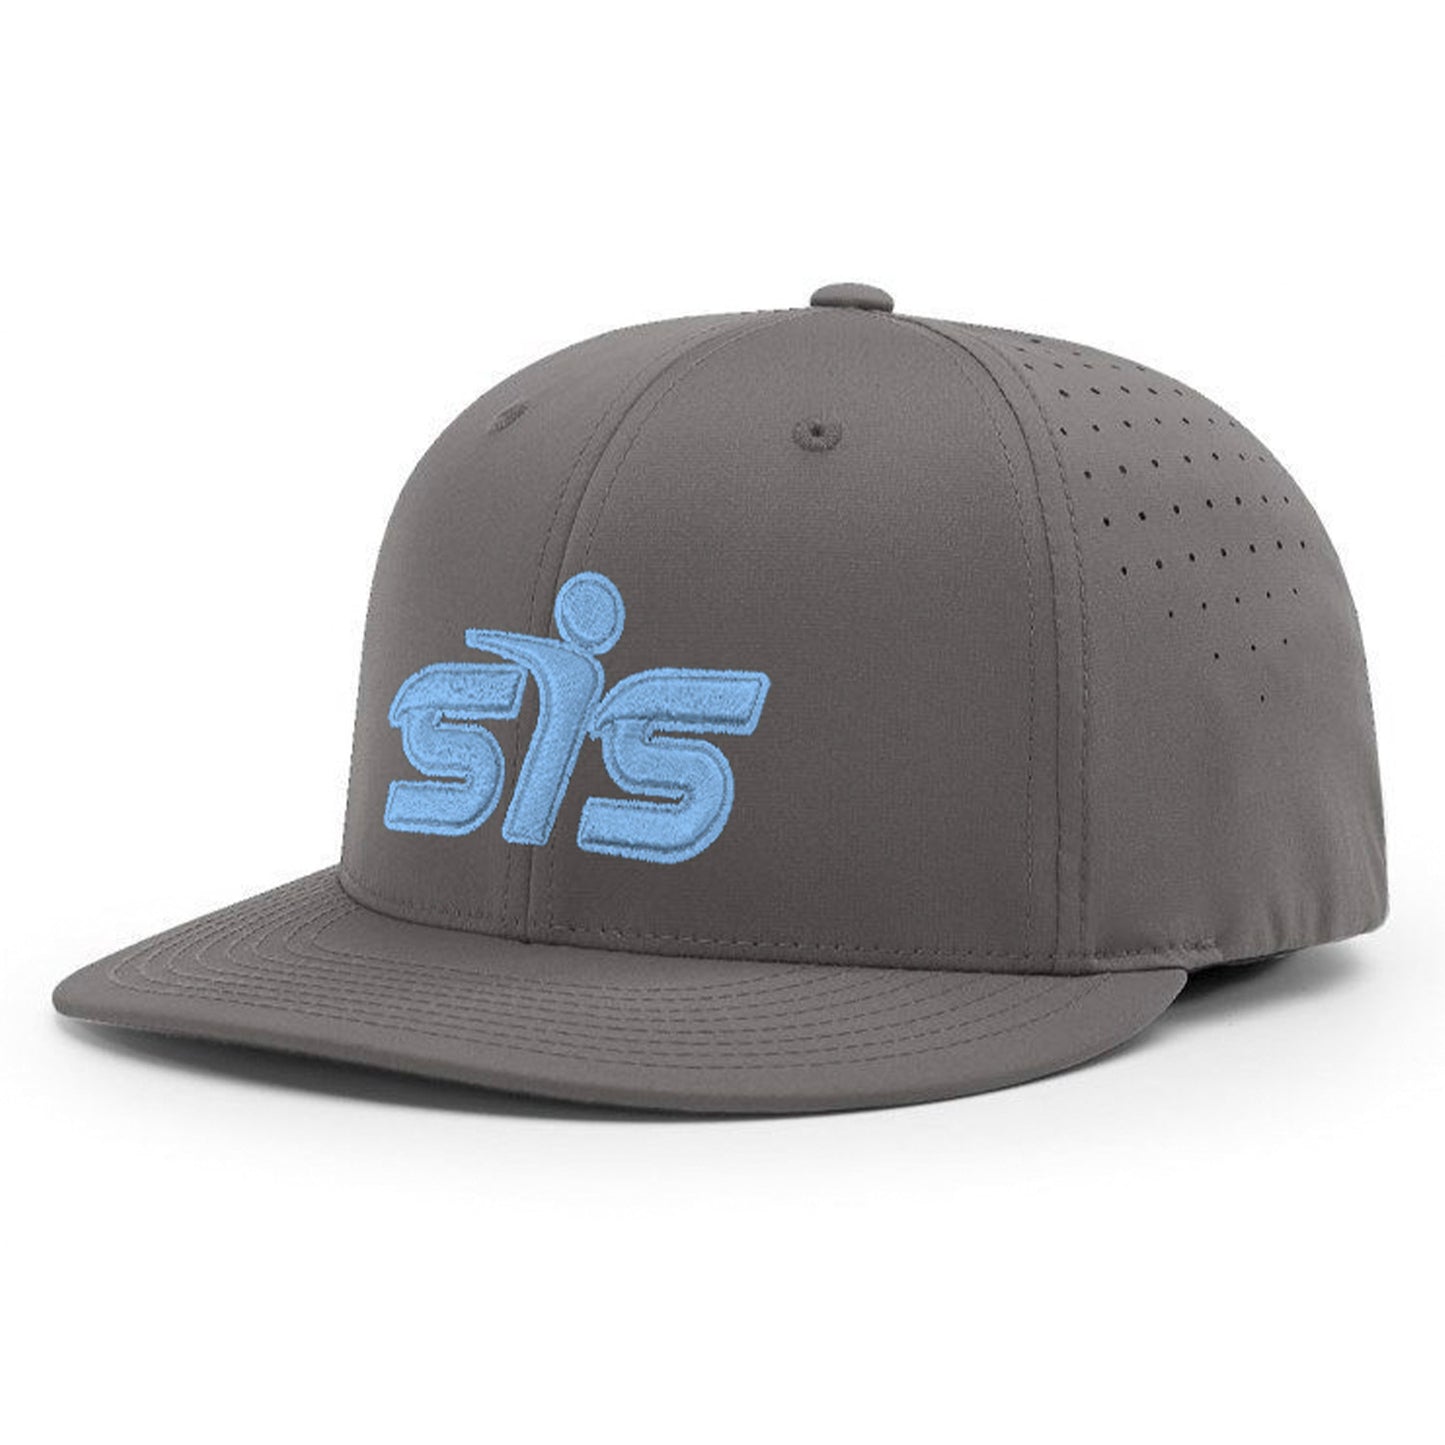 Smash It Sports CA i8503 Performance Hat - New Logo - Charcoal/Carolina